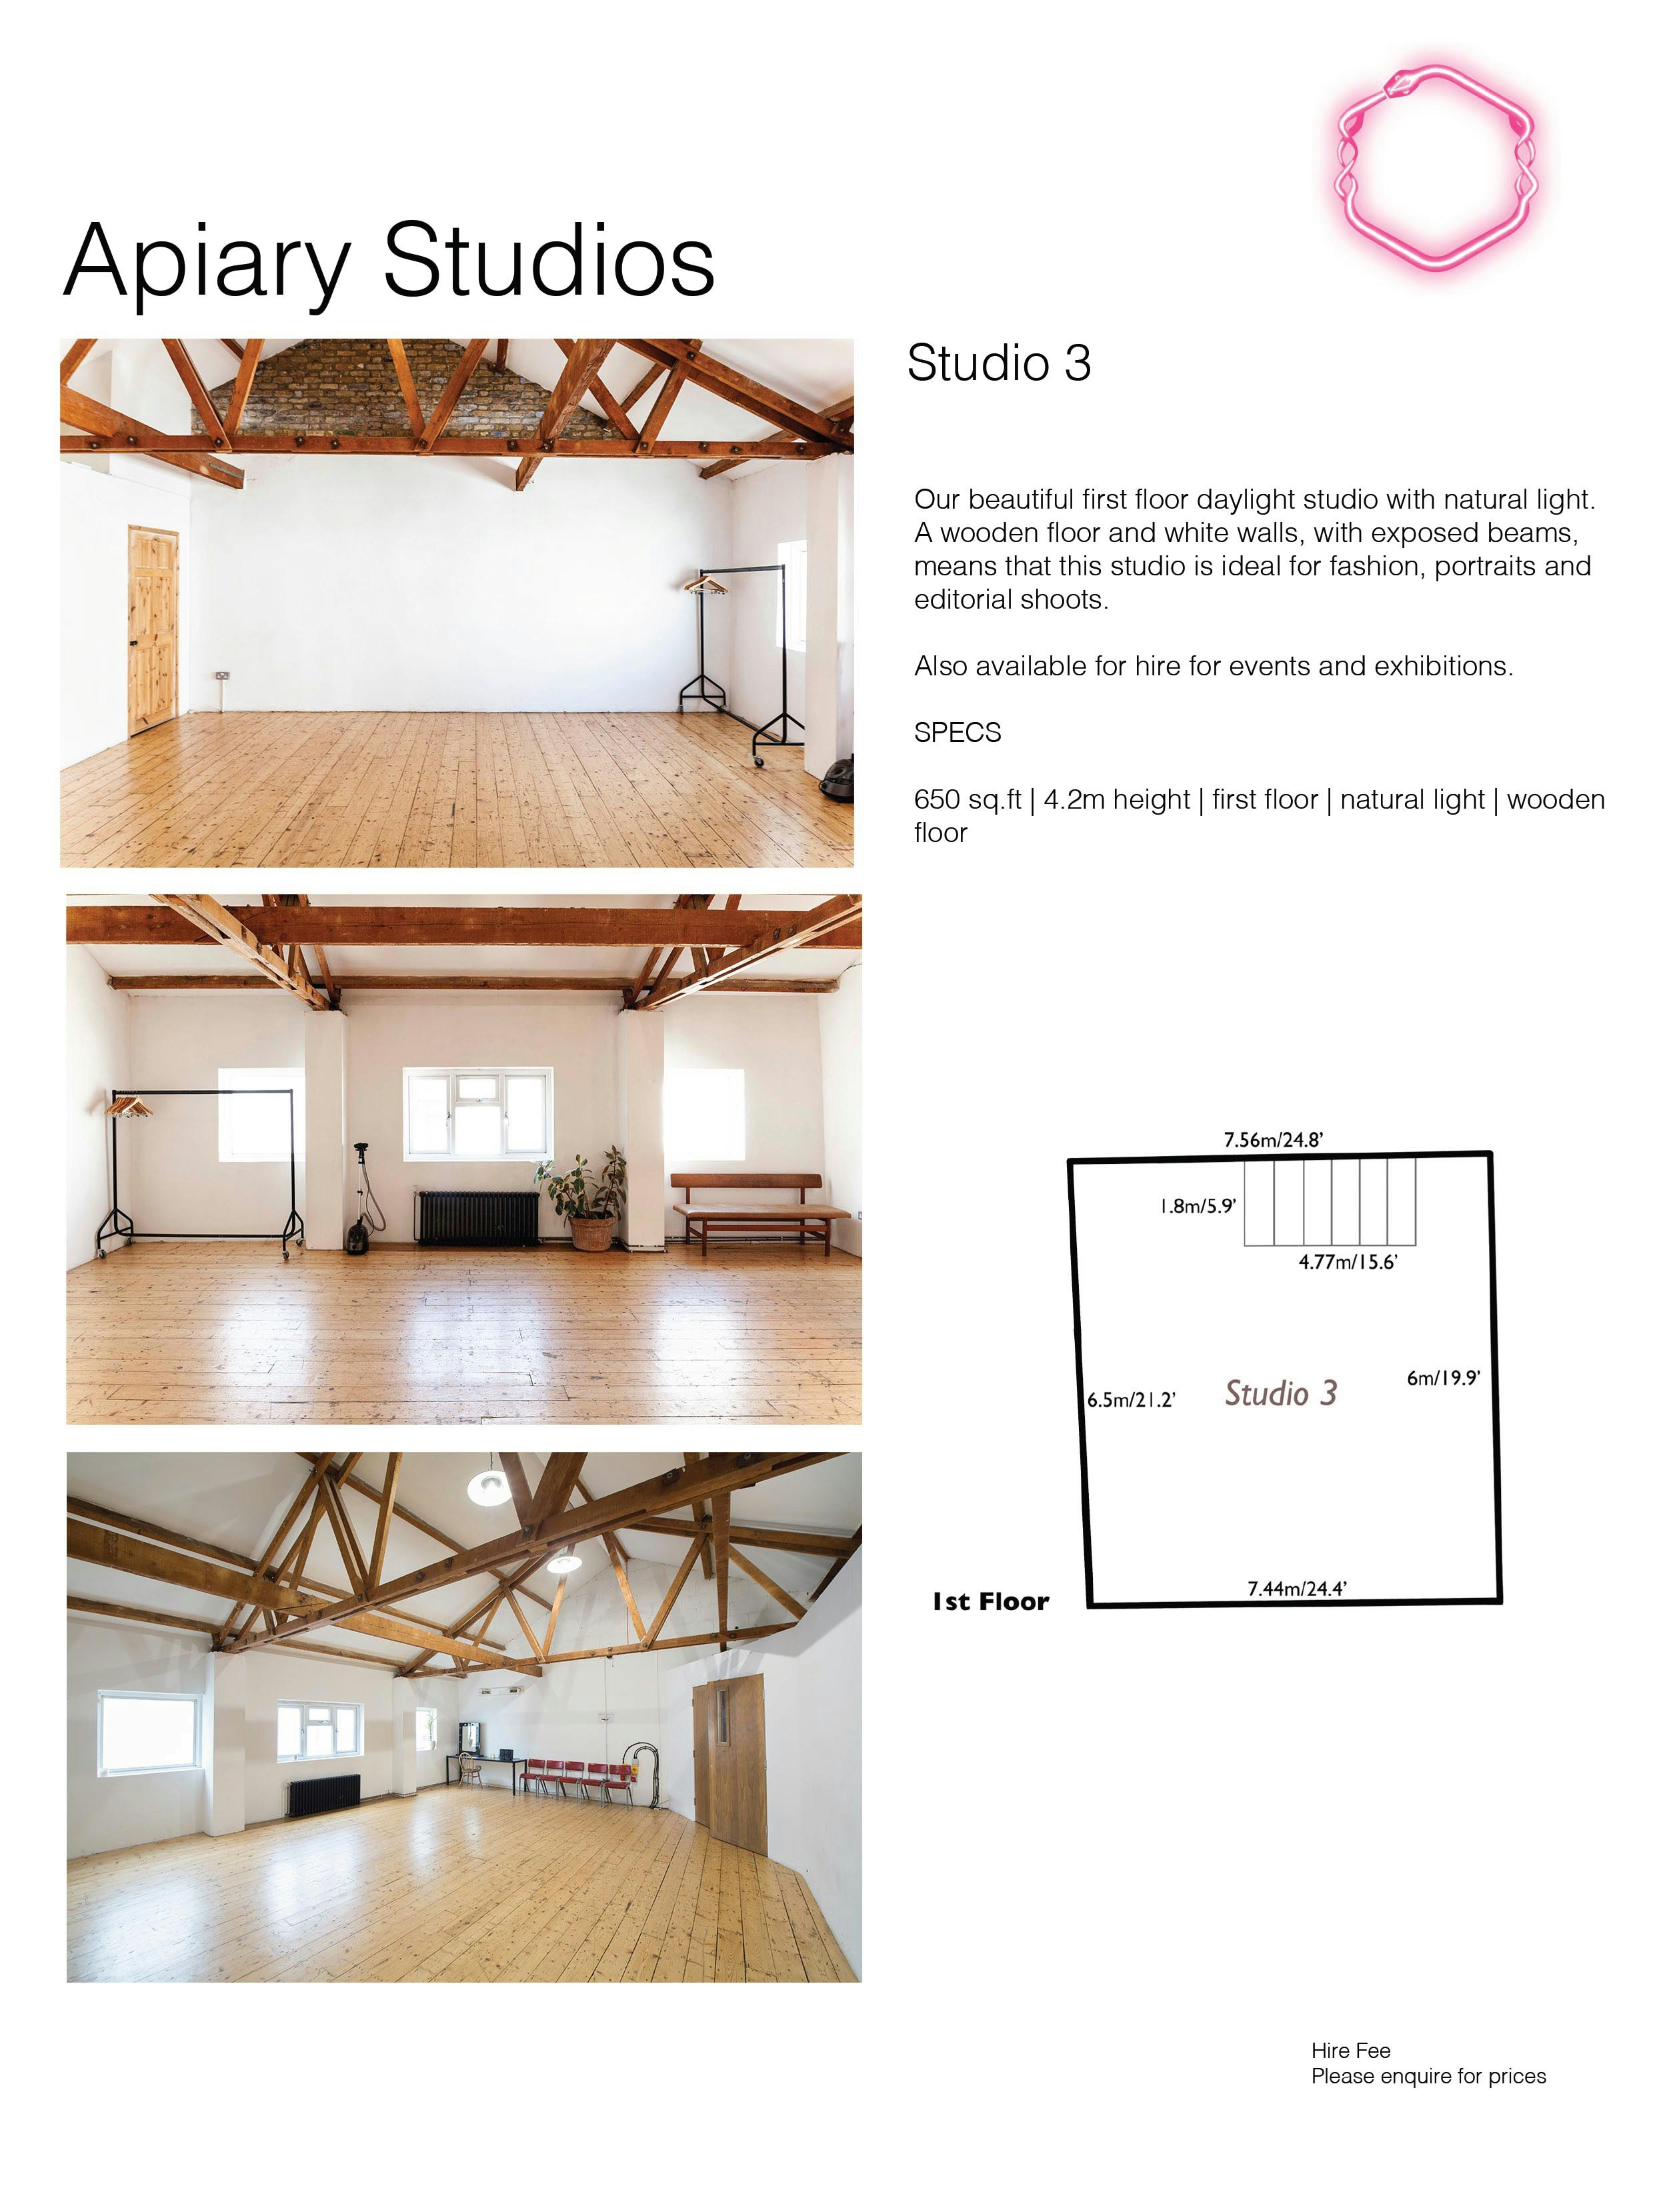 Apiary Studios - Studio 3 image 3